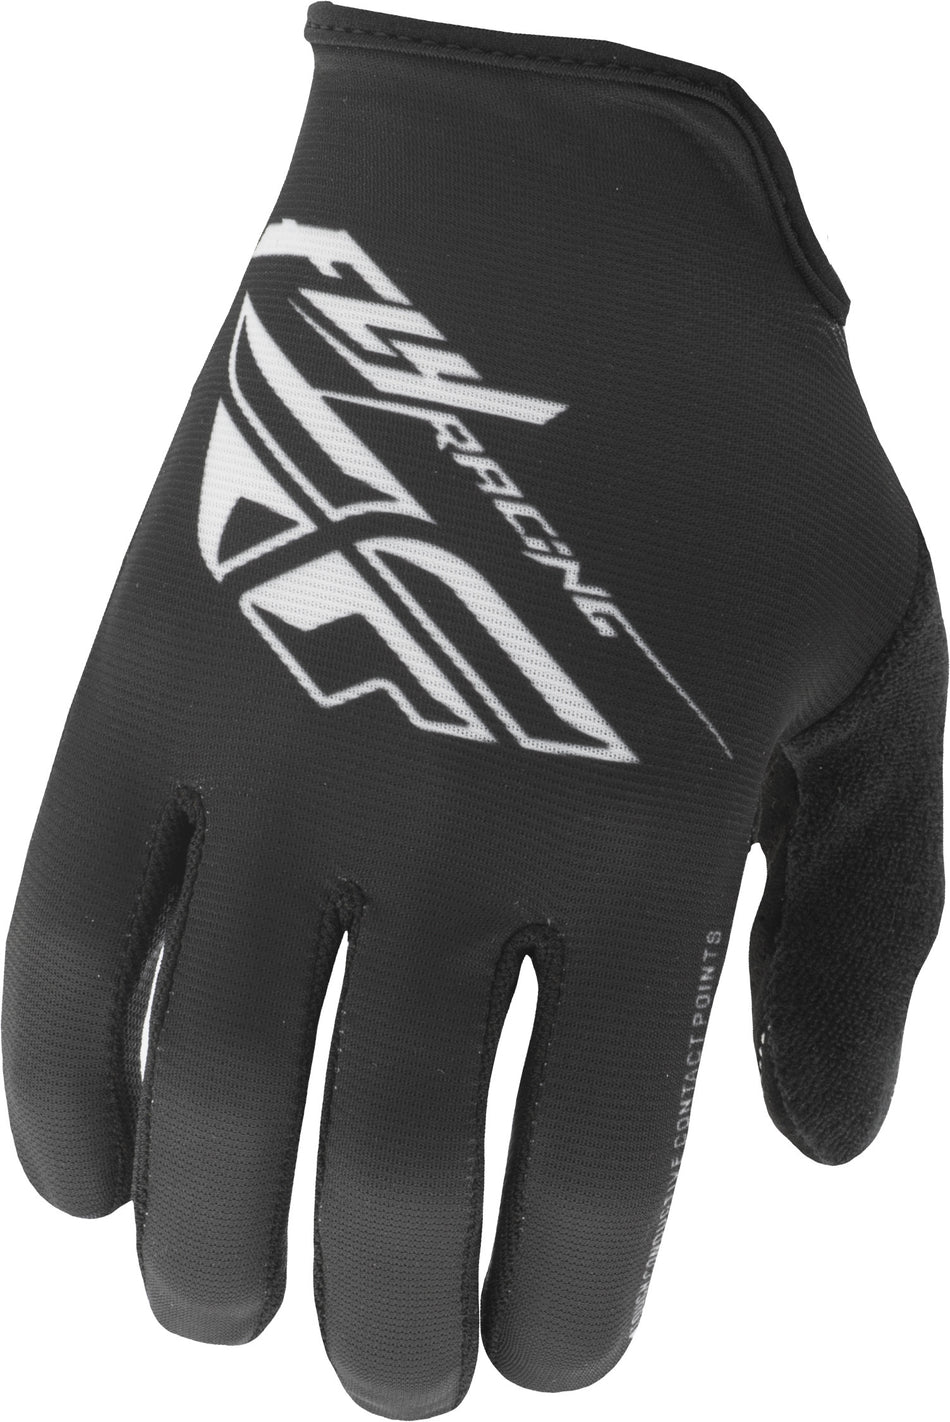 FLY RACING Media Gloves Black Sz 11 350-09011